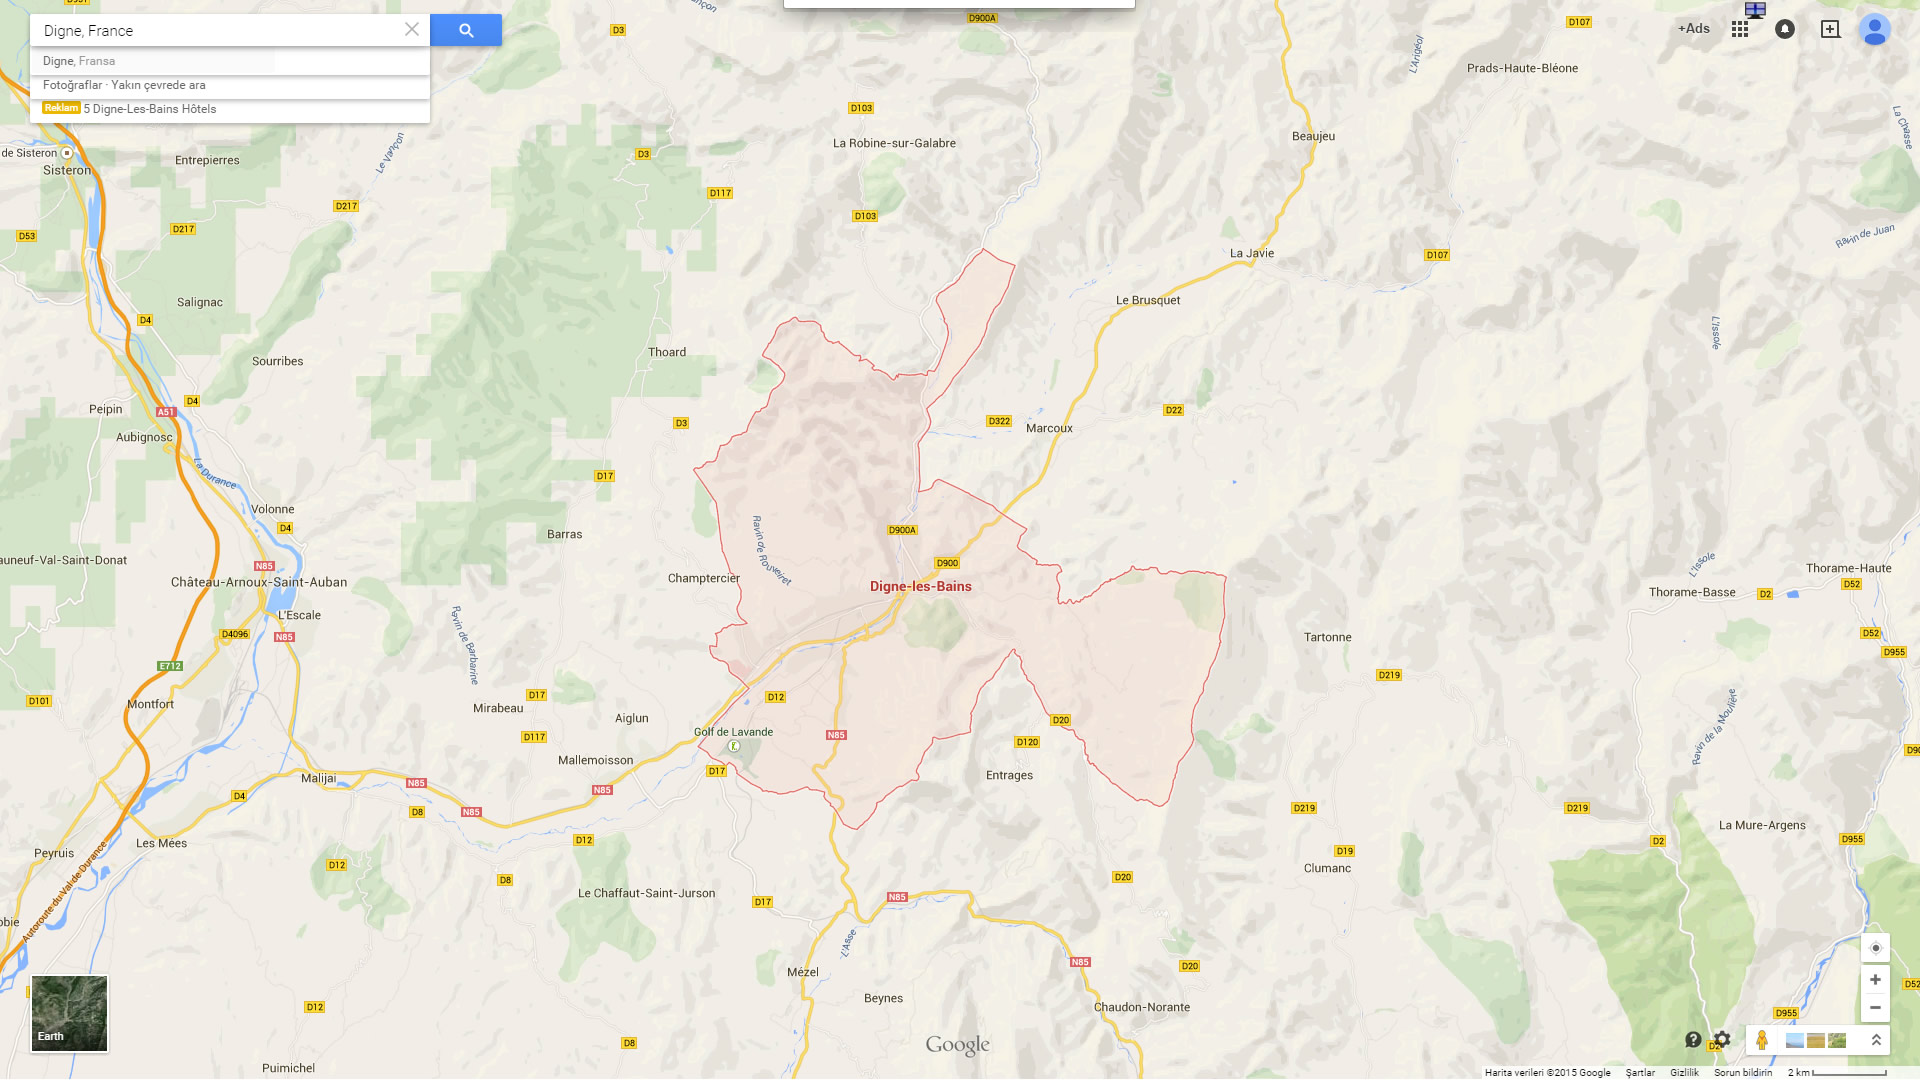 digne france province map